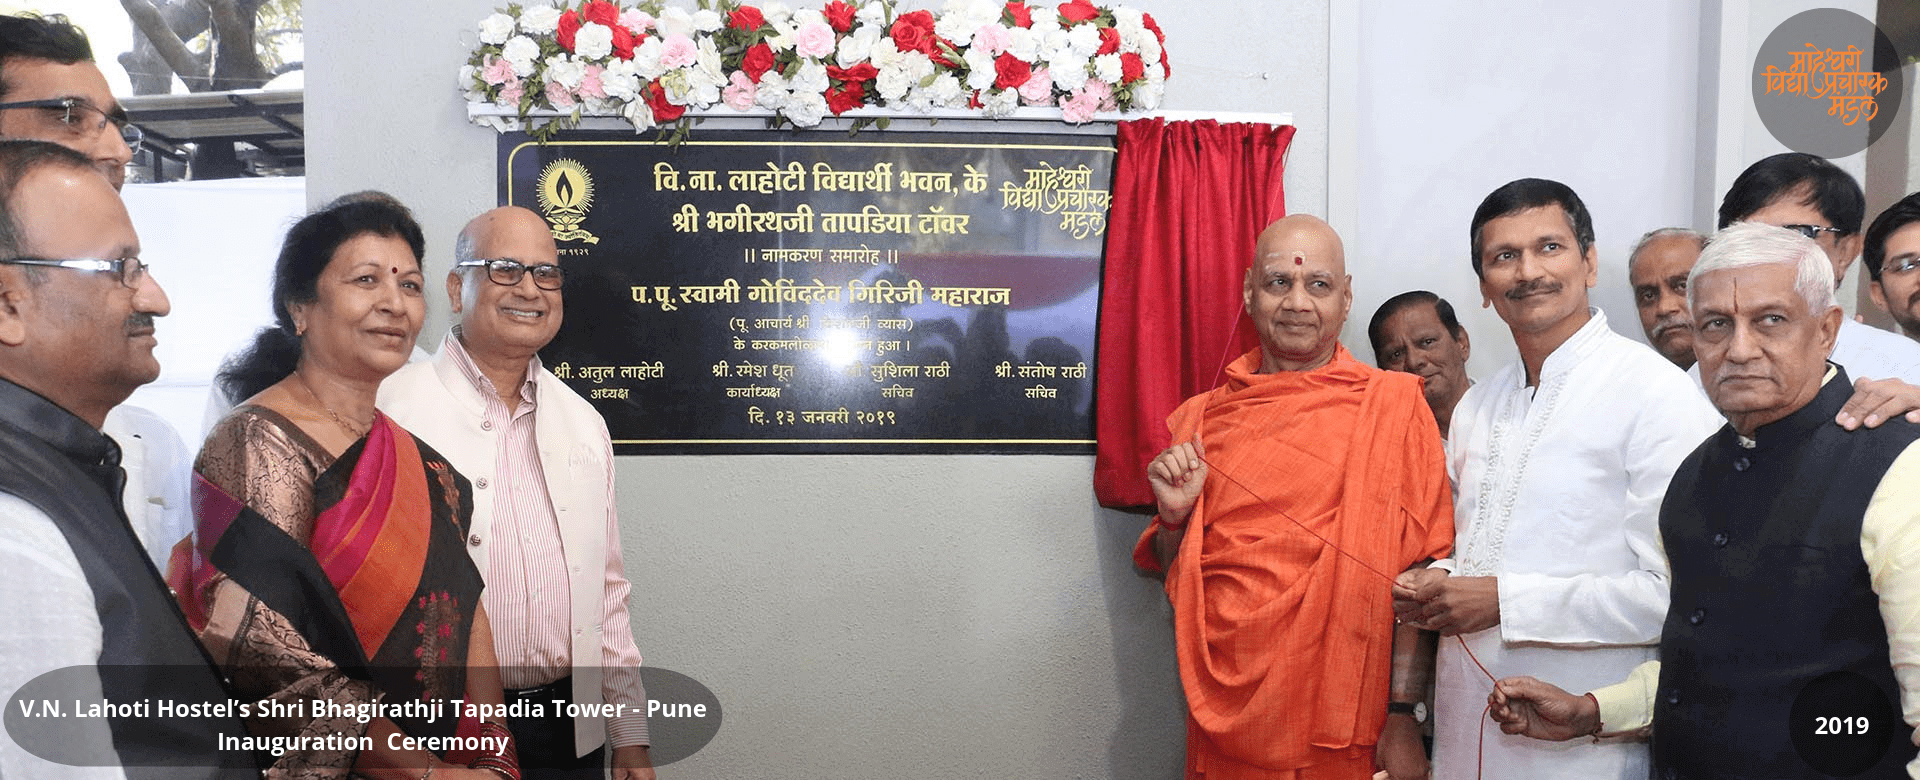 8.	V.N. Lahoti Hostel’s Shri Bhagirathji Tapadia Tower - Pune Inauguration  Ceremony  2019